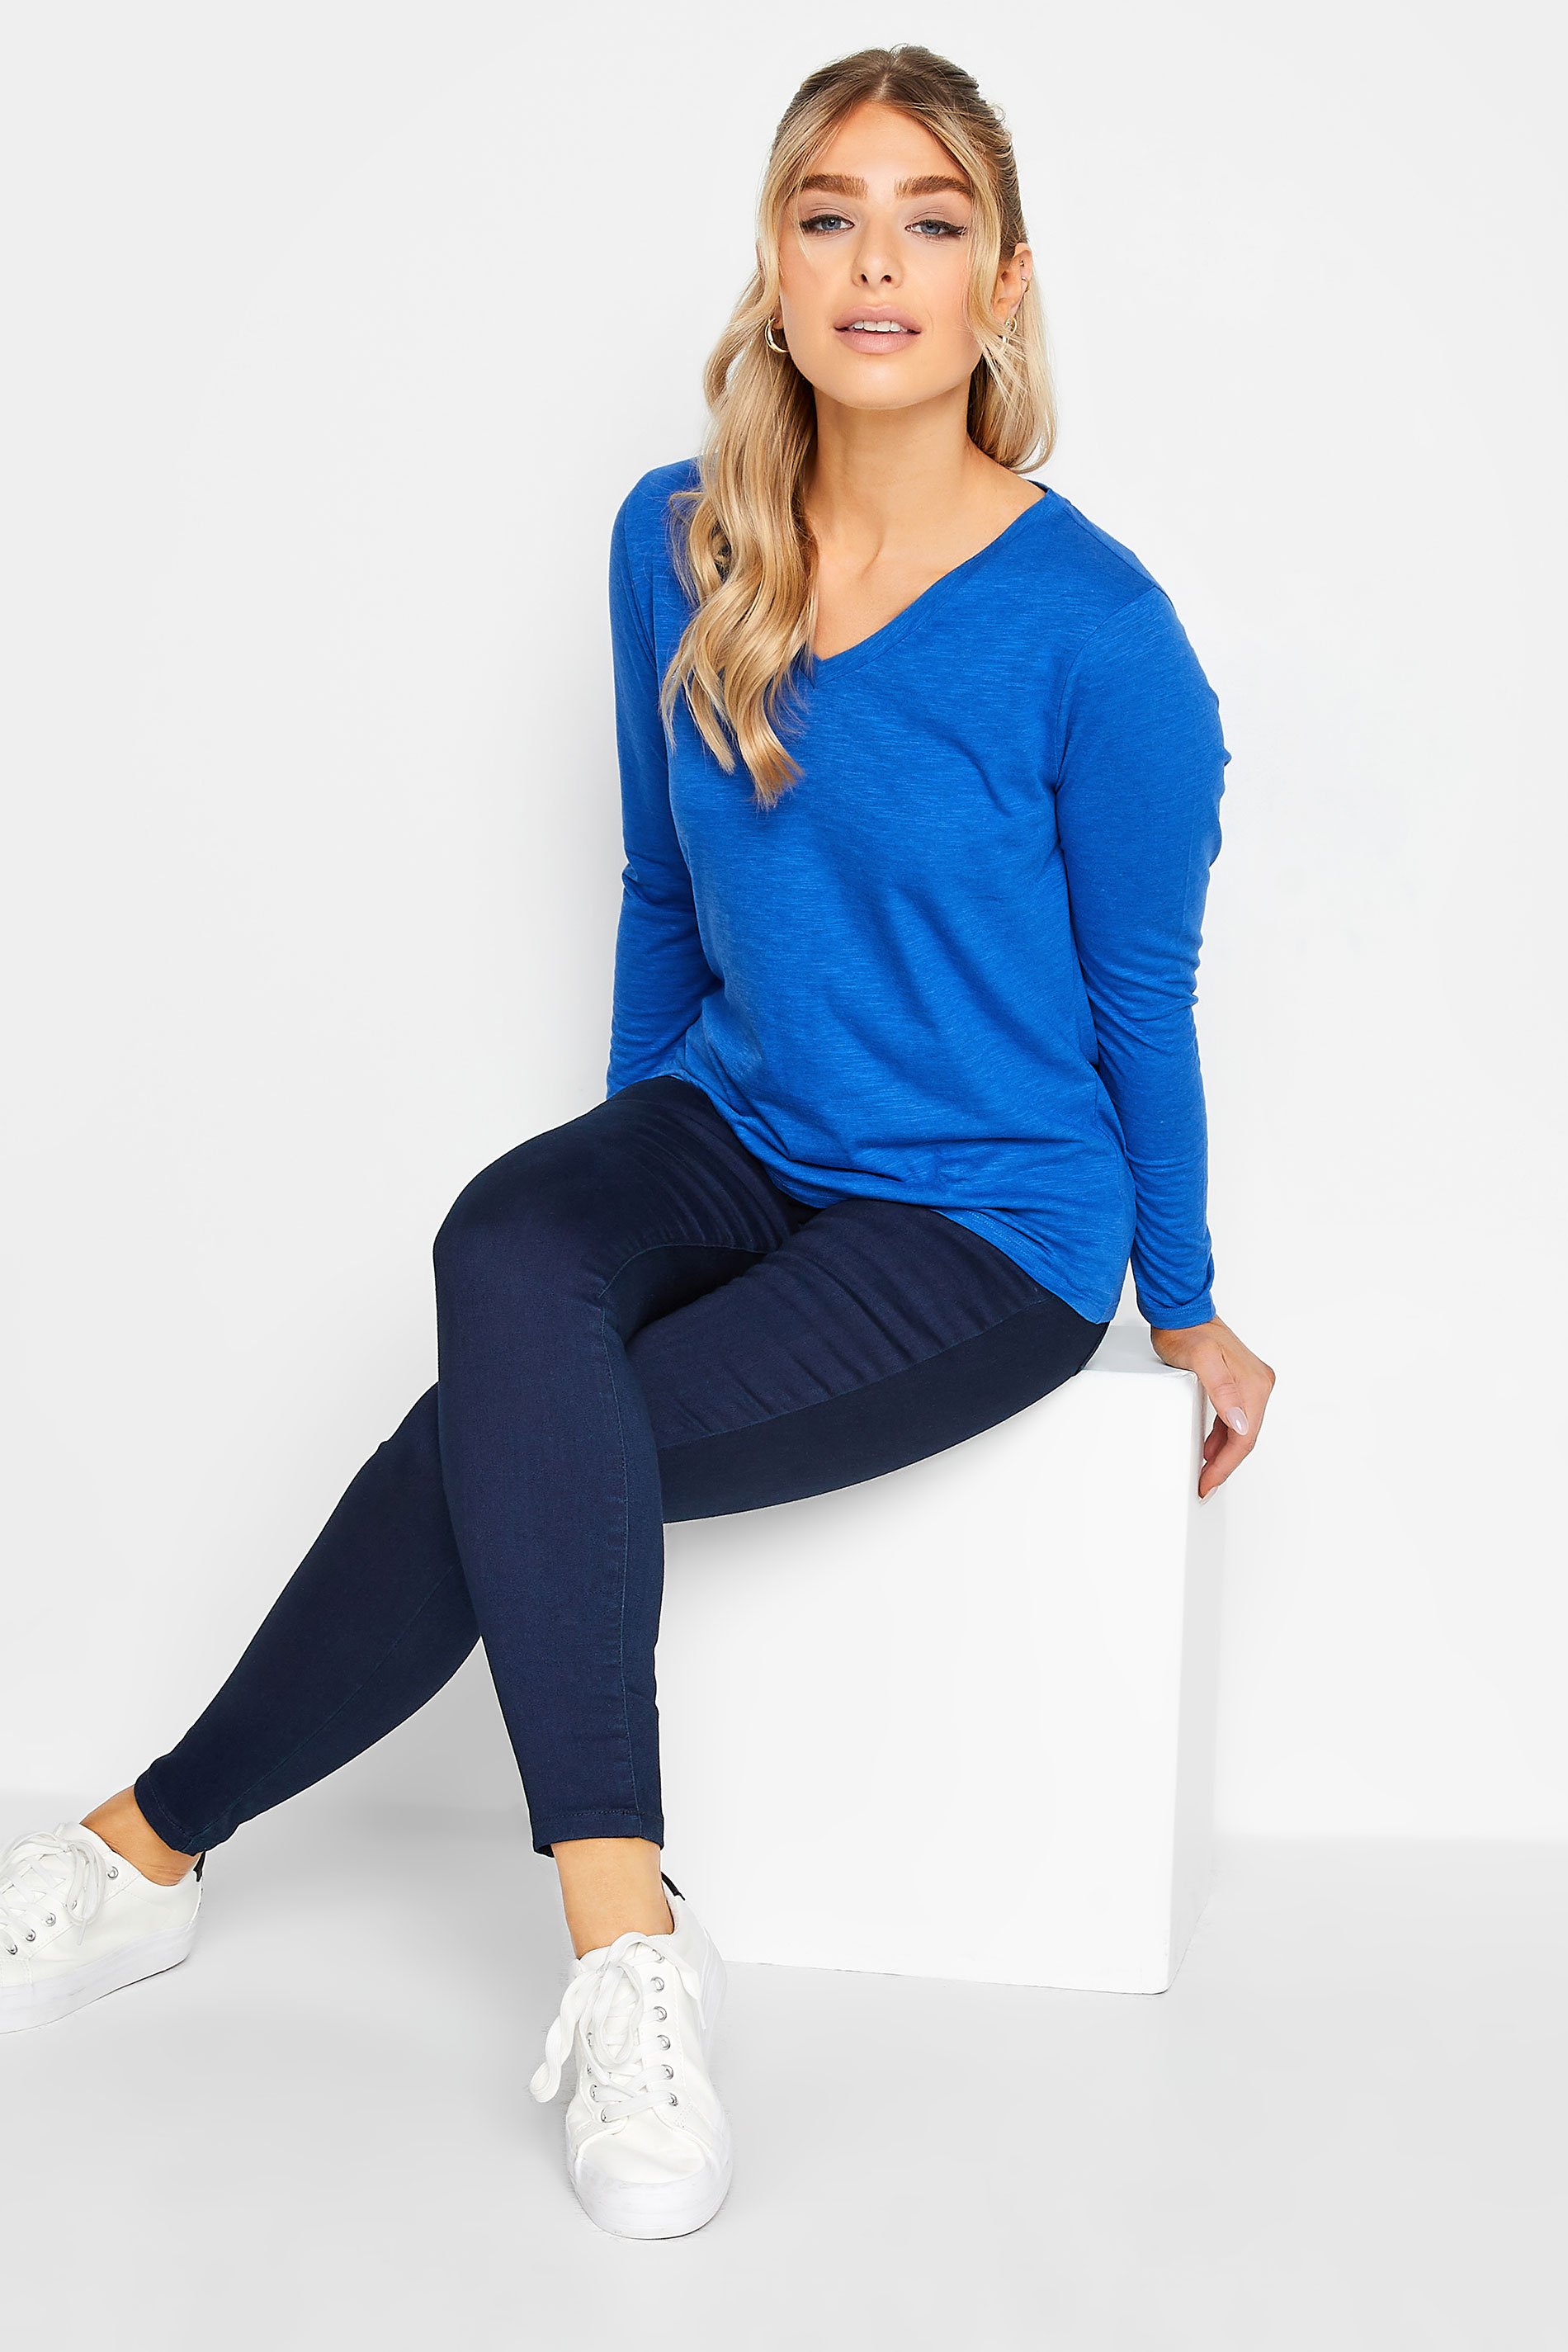 M&Co Blue V-Neck Long Sleeve Cotton T-Shirt | M&Co 2